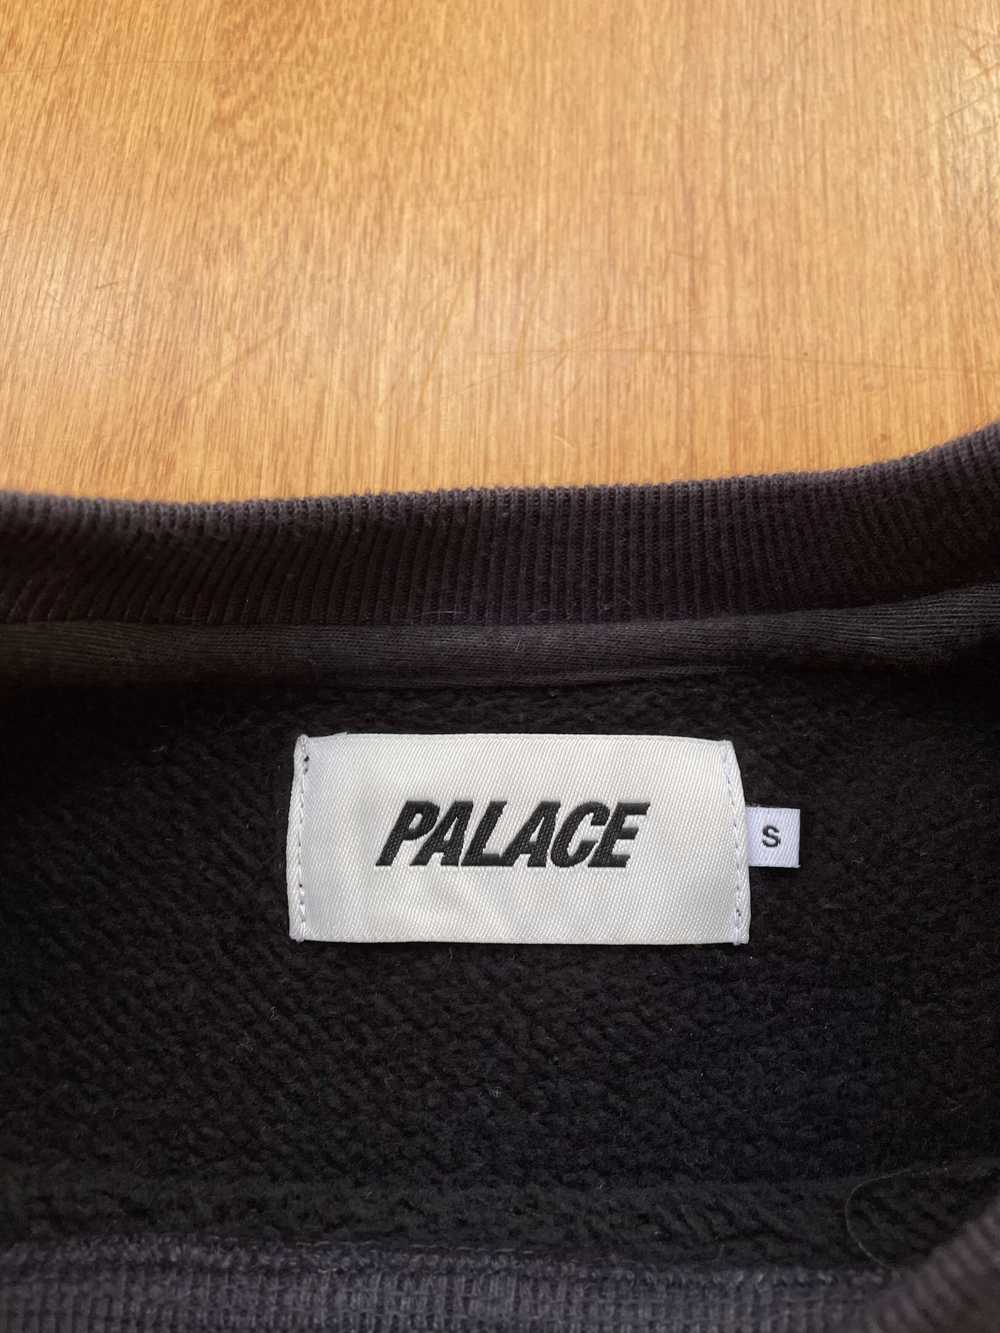 Palace Palace Patch Crew Black - image 5